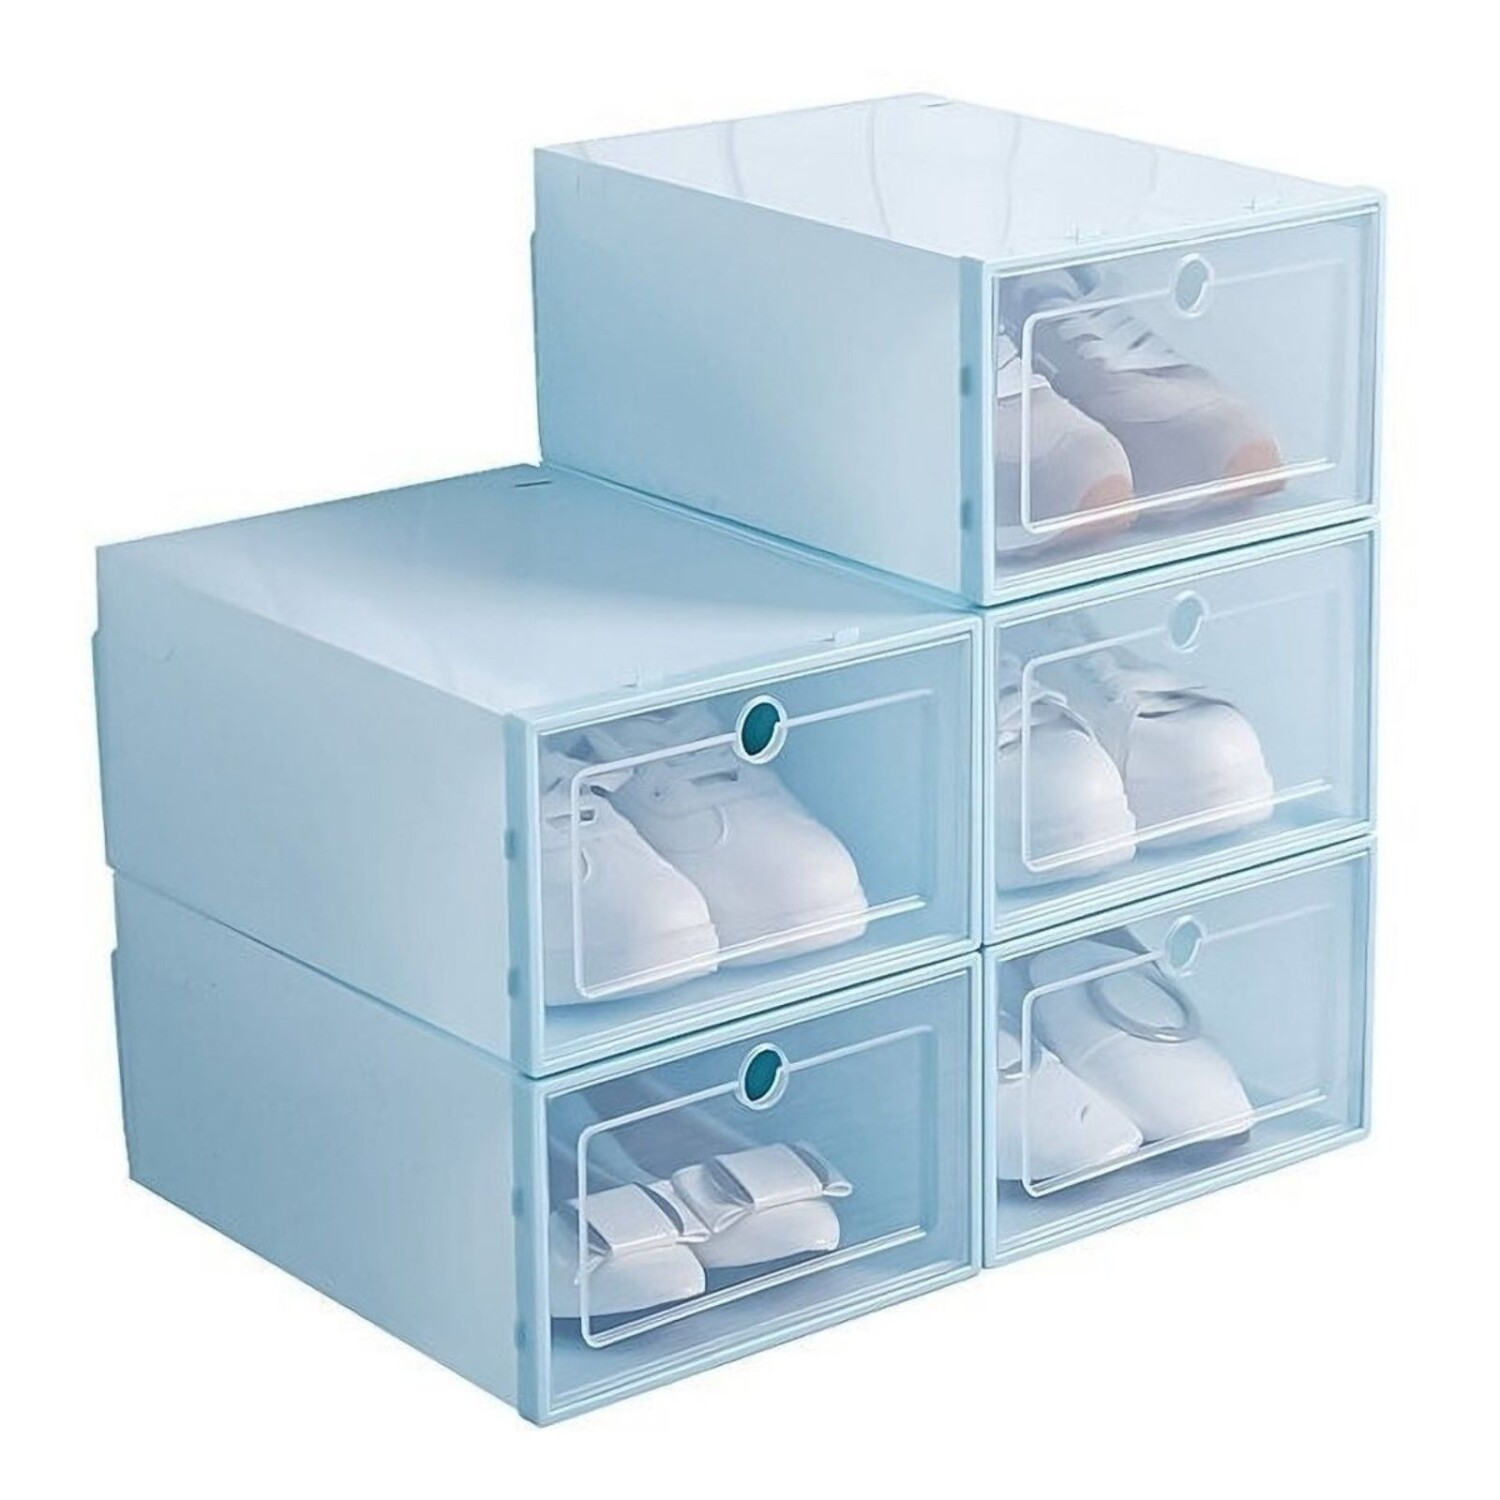  Toyvian Cajas de zapatos transparentes apilables, caja